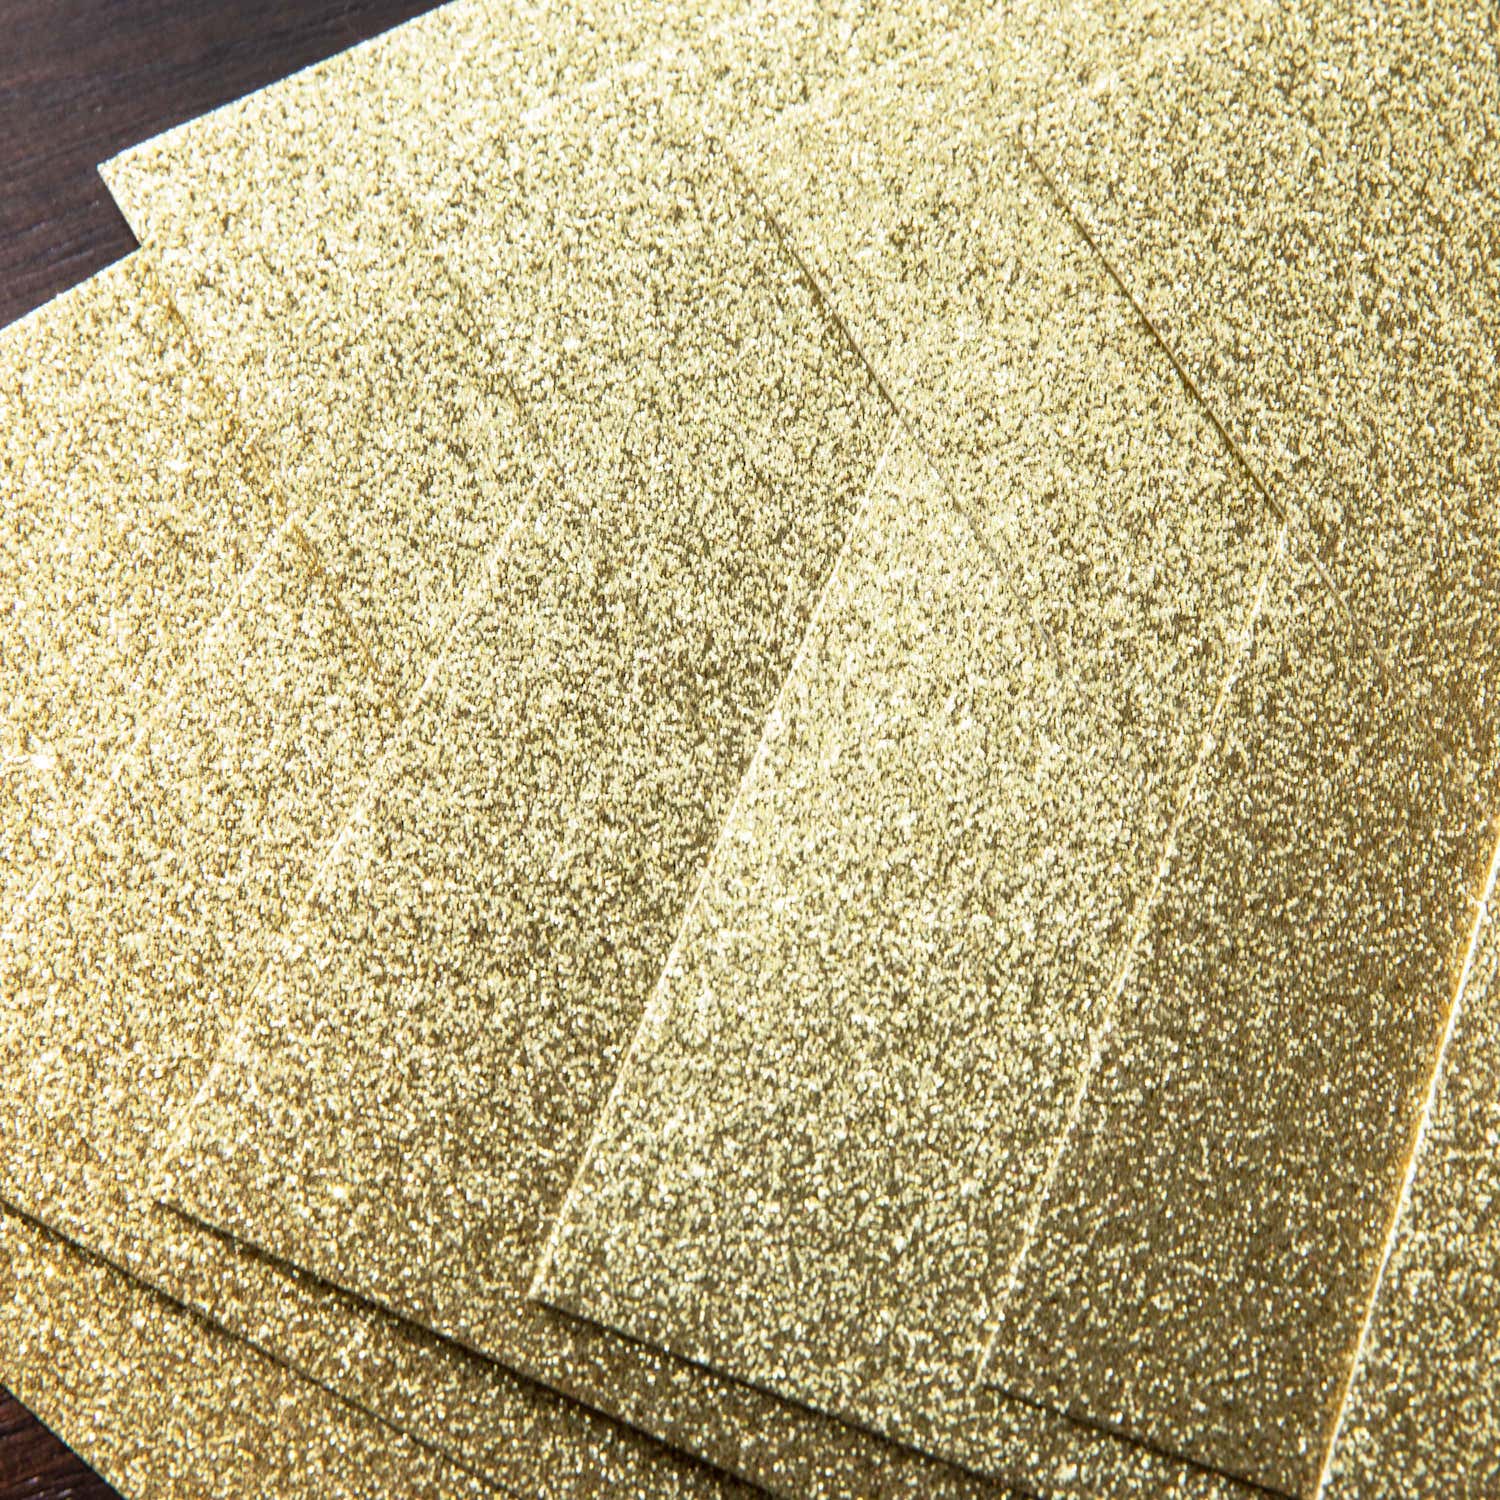 12x12 Gold Glitter Cardstock, 300gsm Cardstock, Premium Glitter Cardstock,  Paper for Crafts 